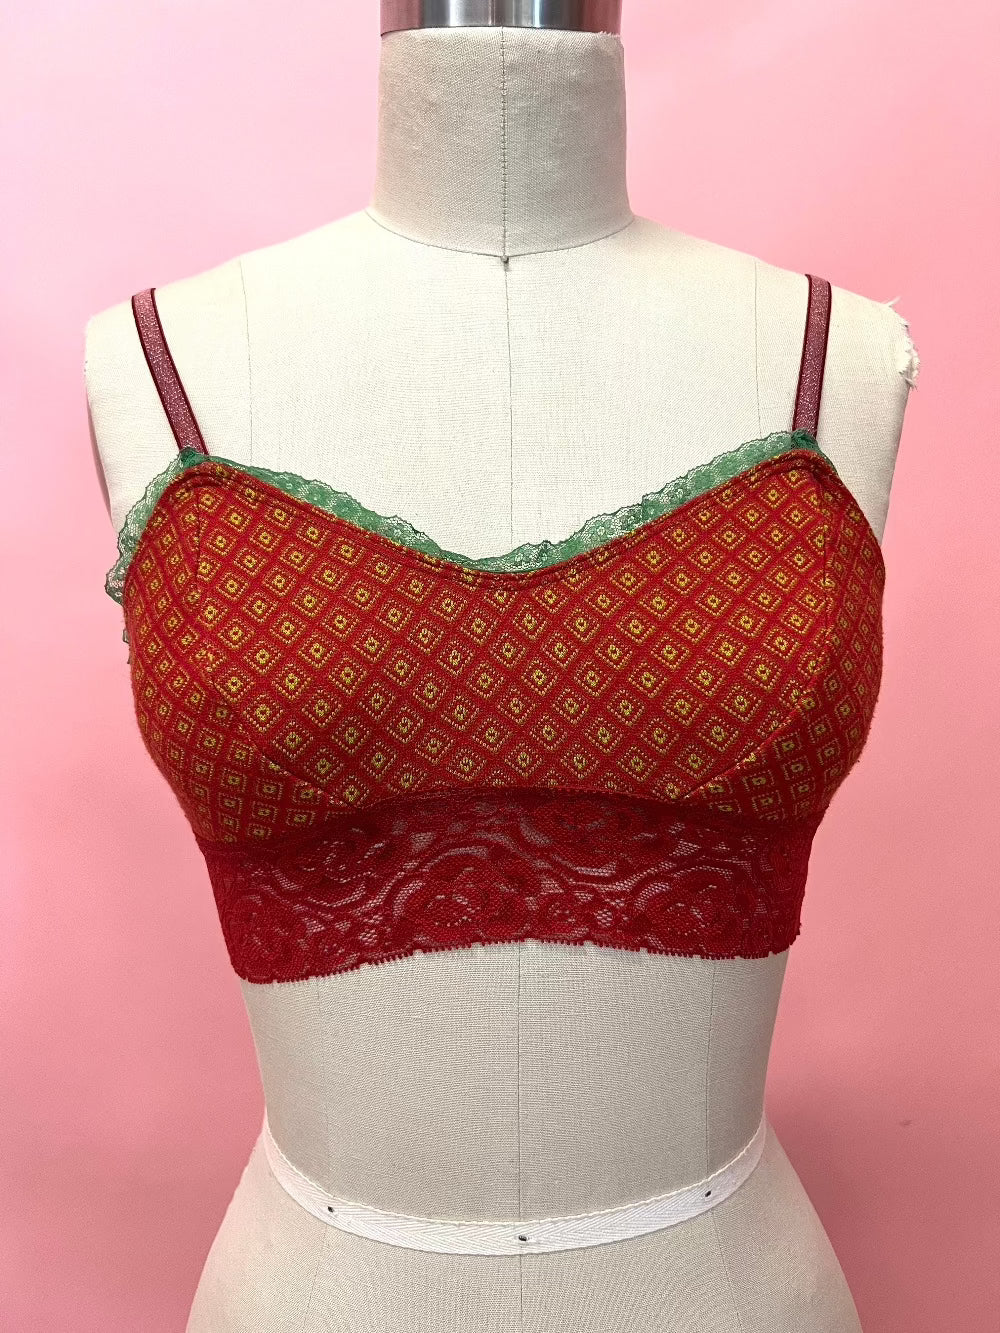 Bralette Sewing Pattern PDF – Sew Anastasia